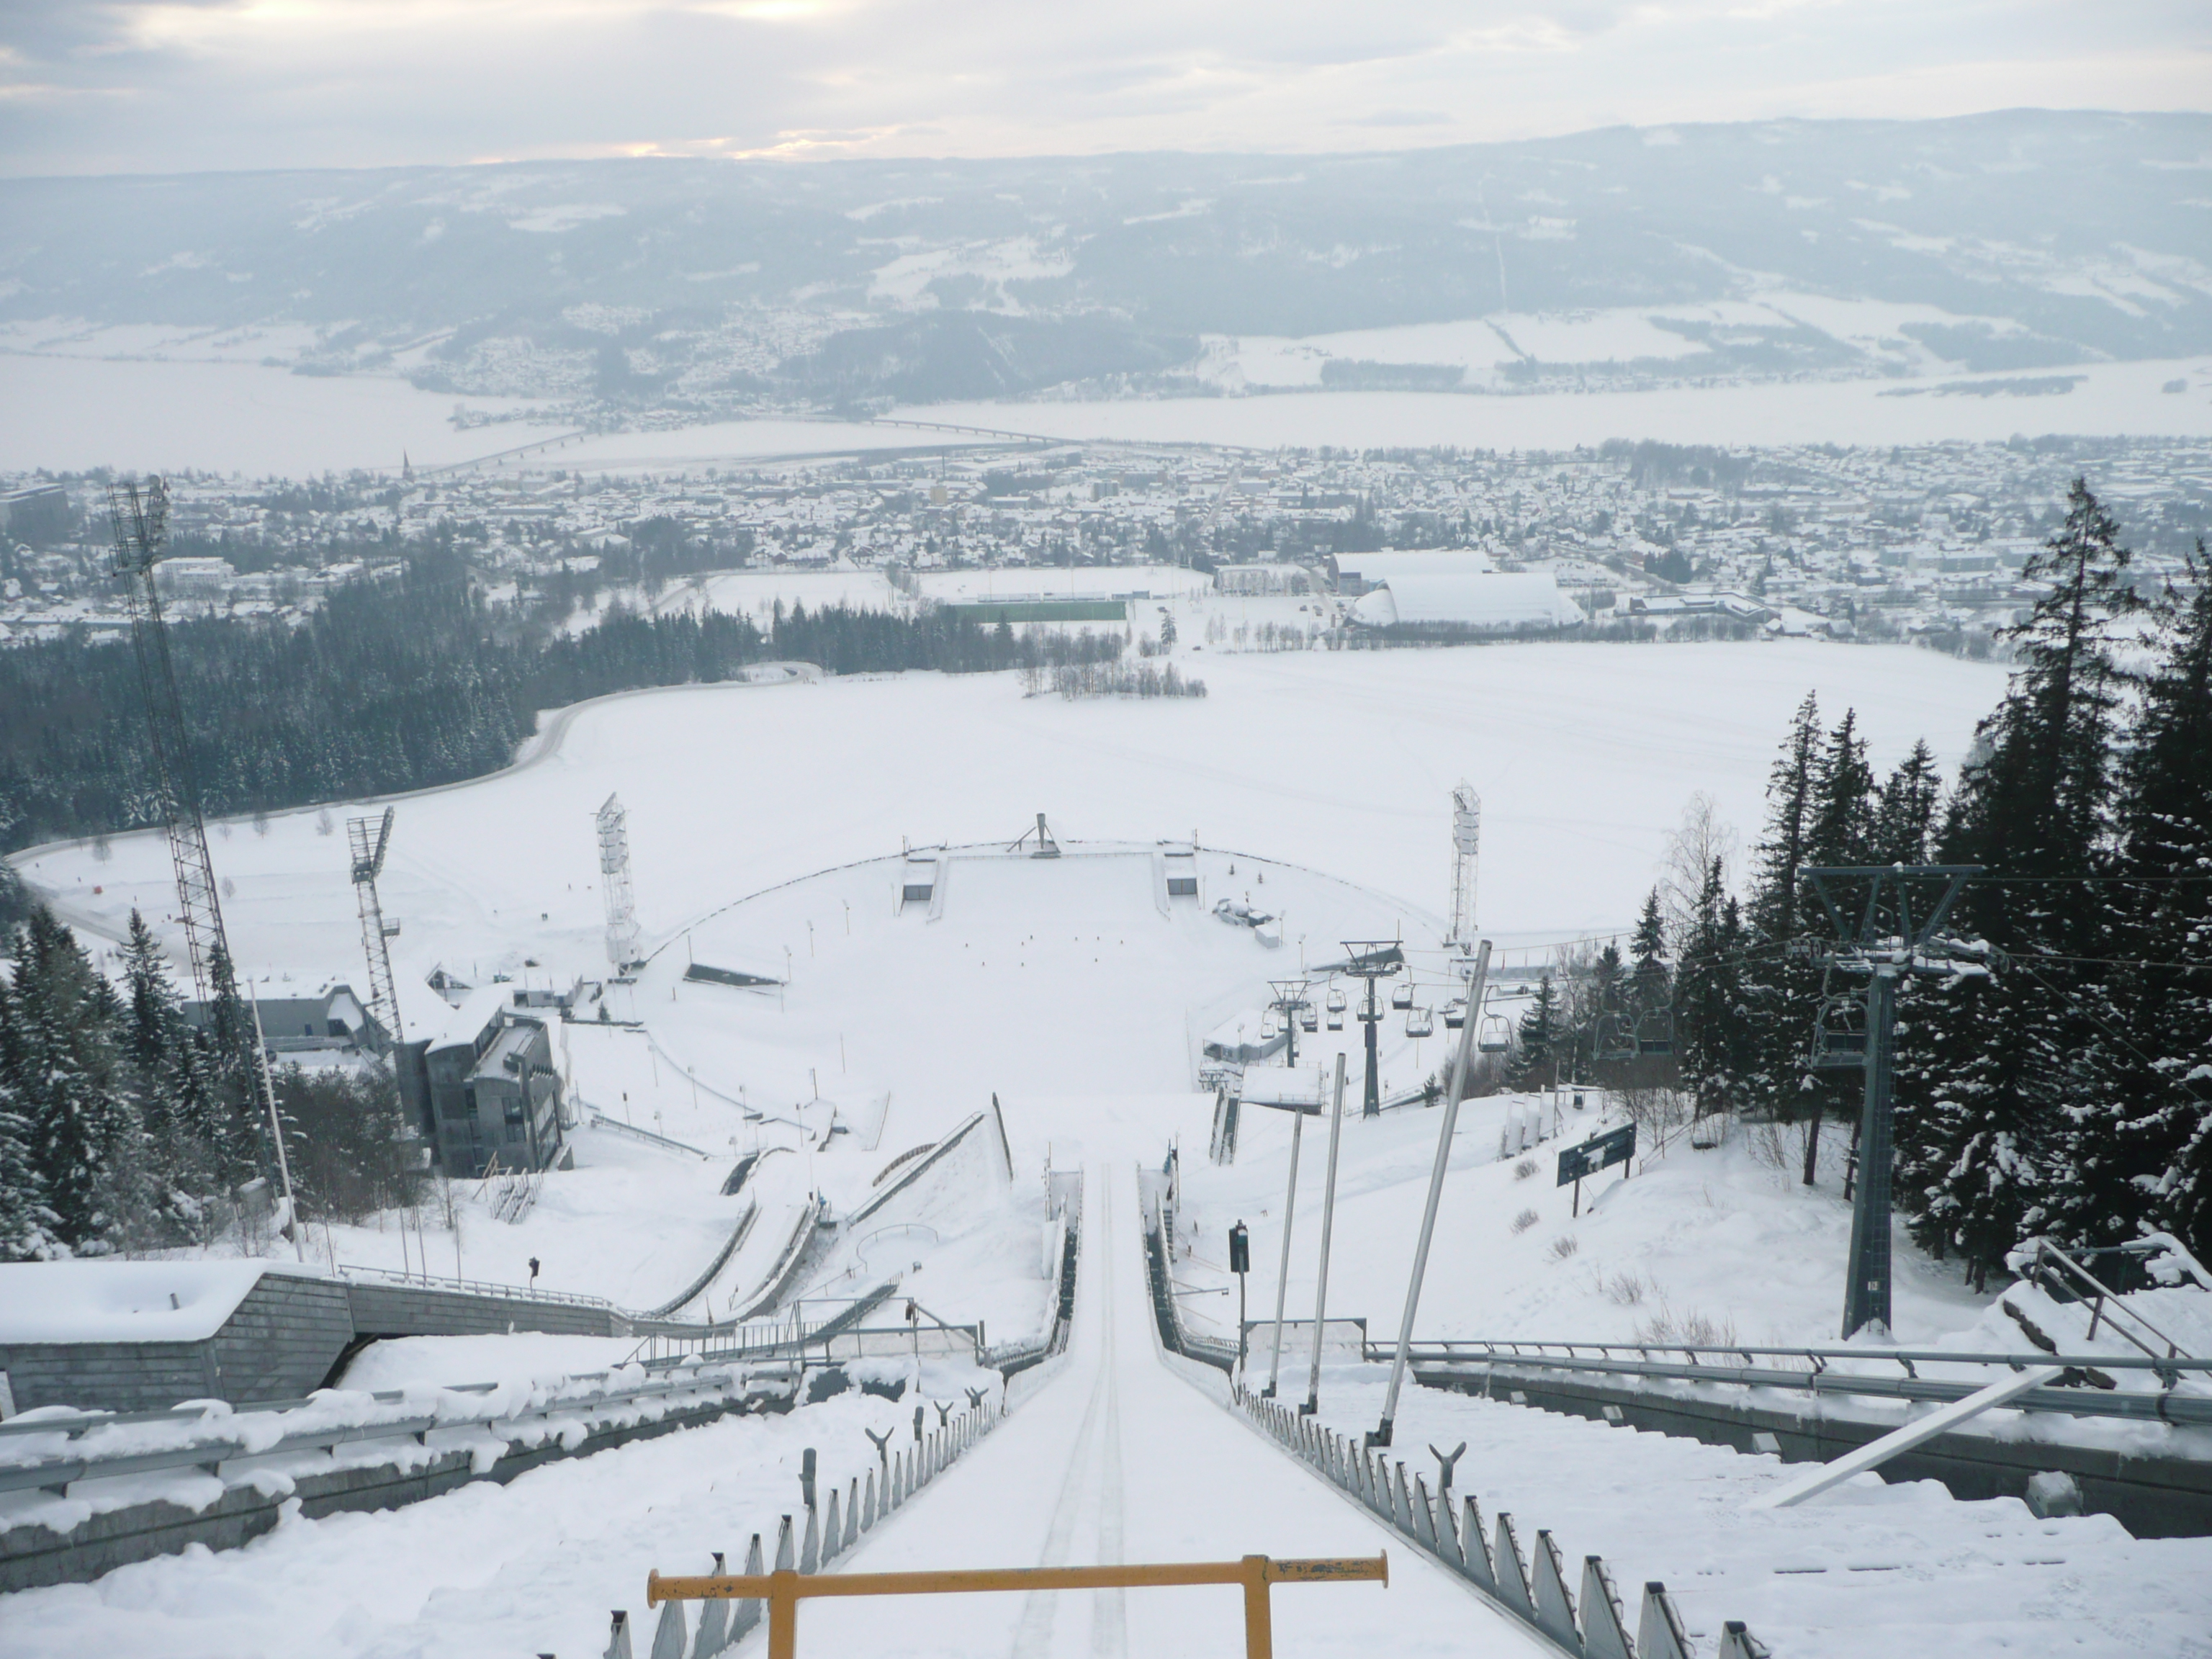 Olympic Ski Jump in Lillehammer